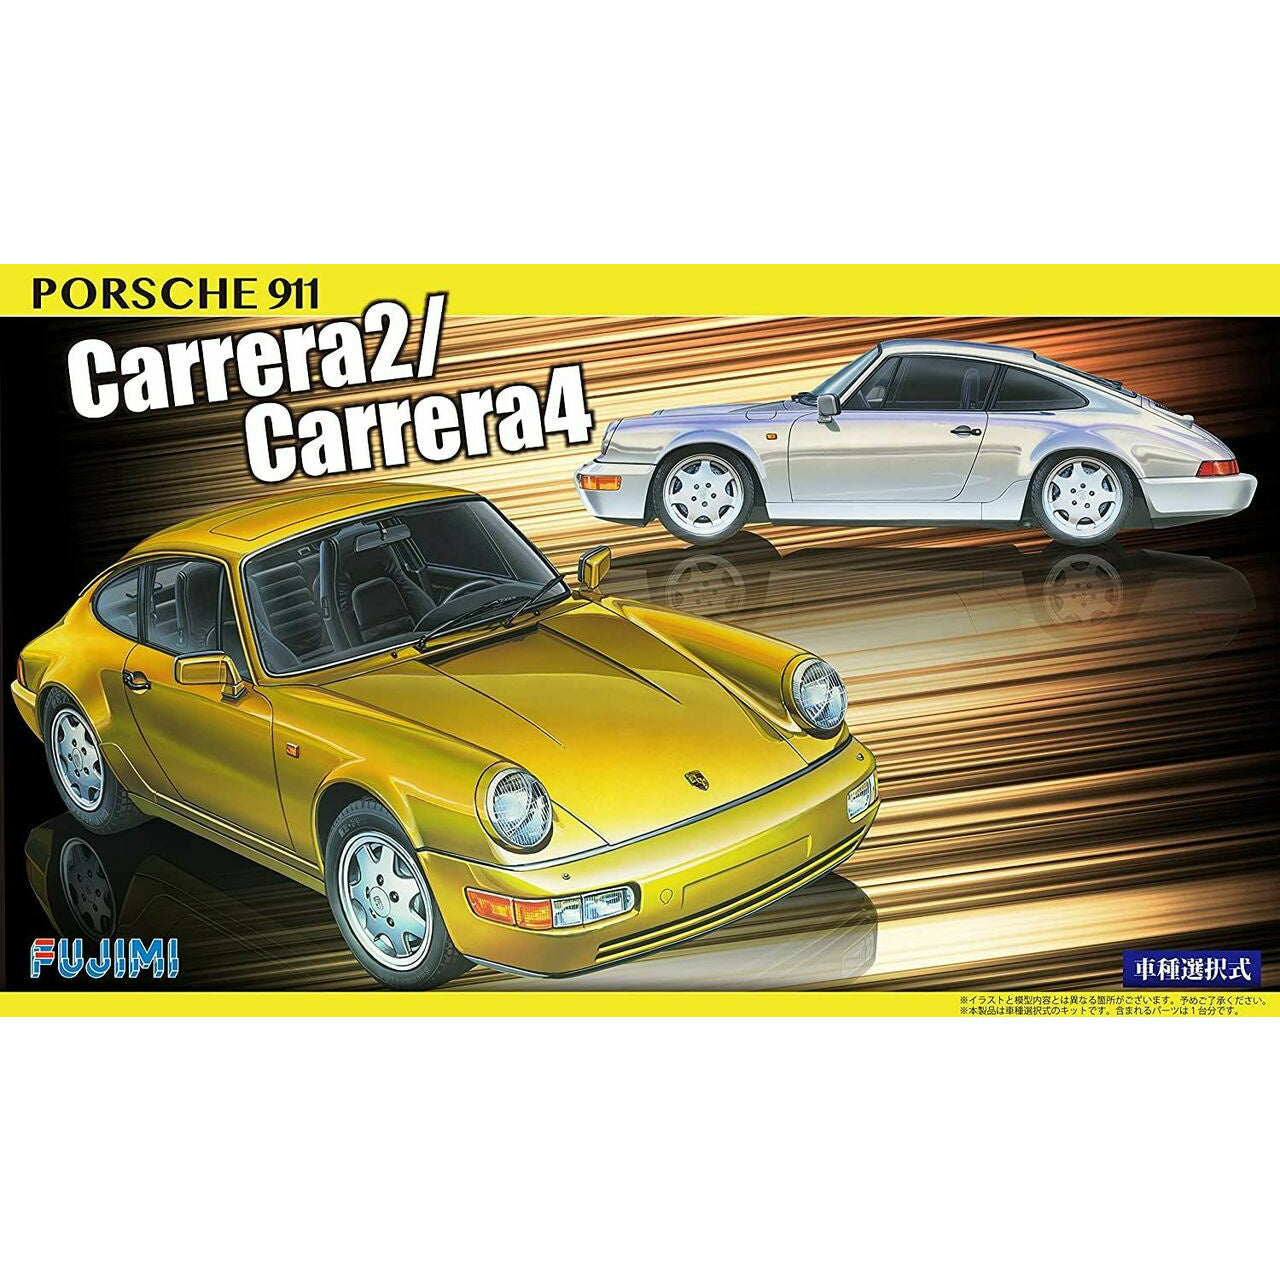 Porsche 911 Carrera 2/Carrera 4 1/24 Model Car Kit #126722 by Fujimi